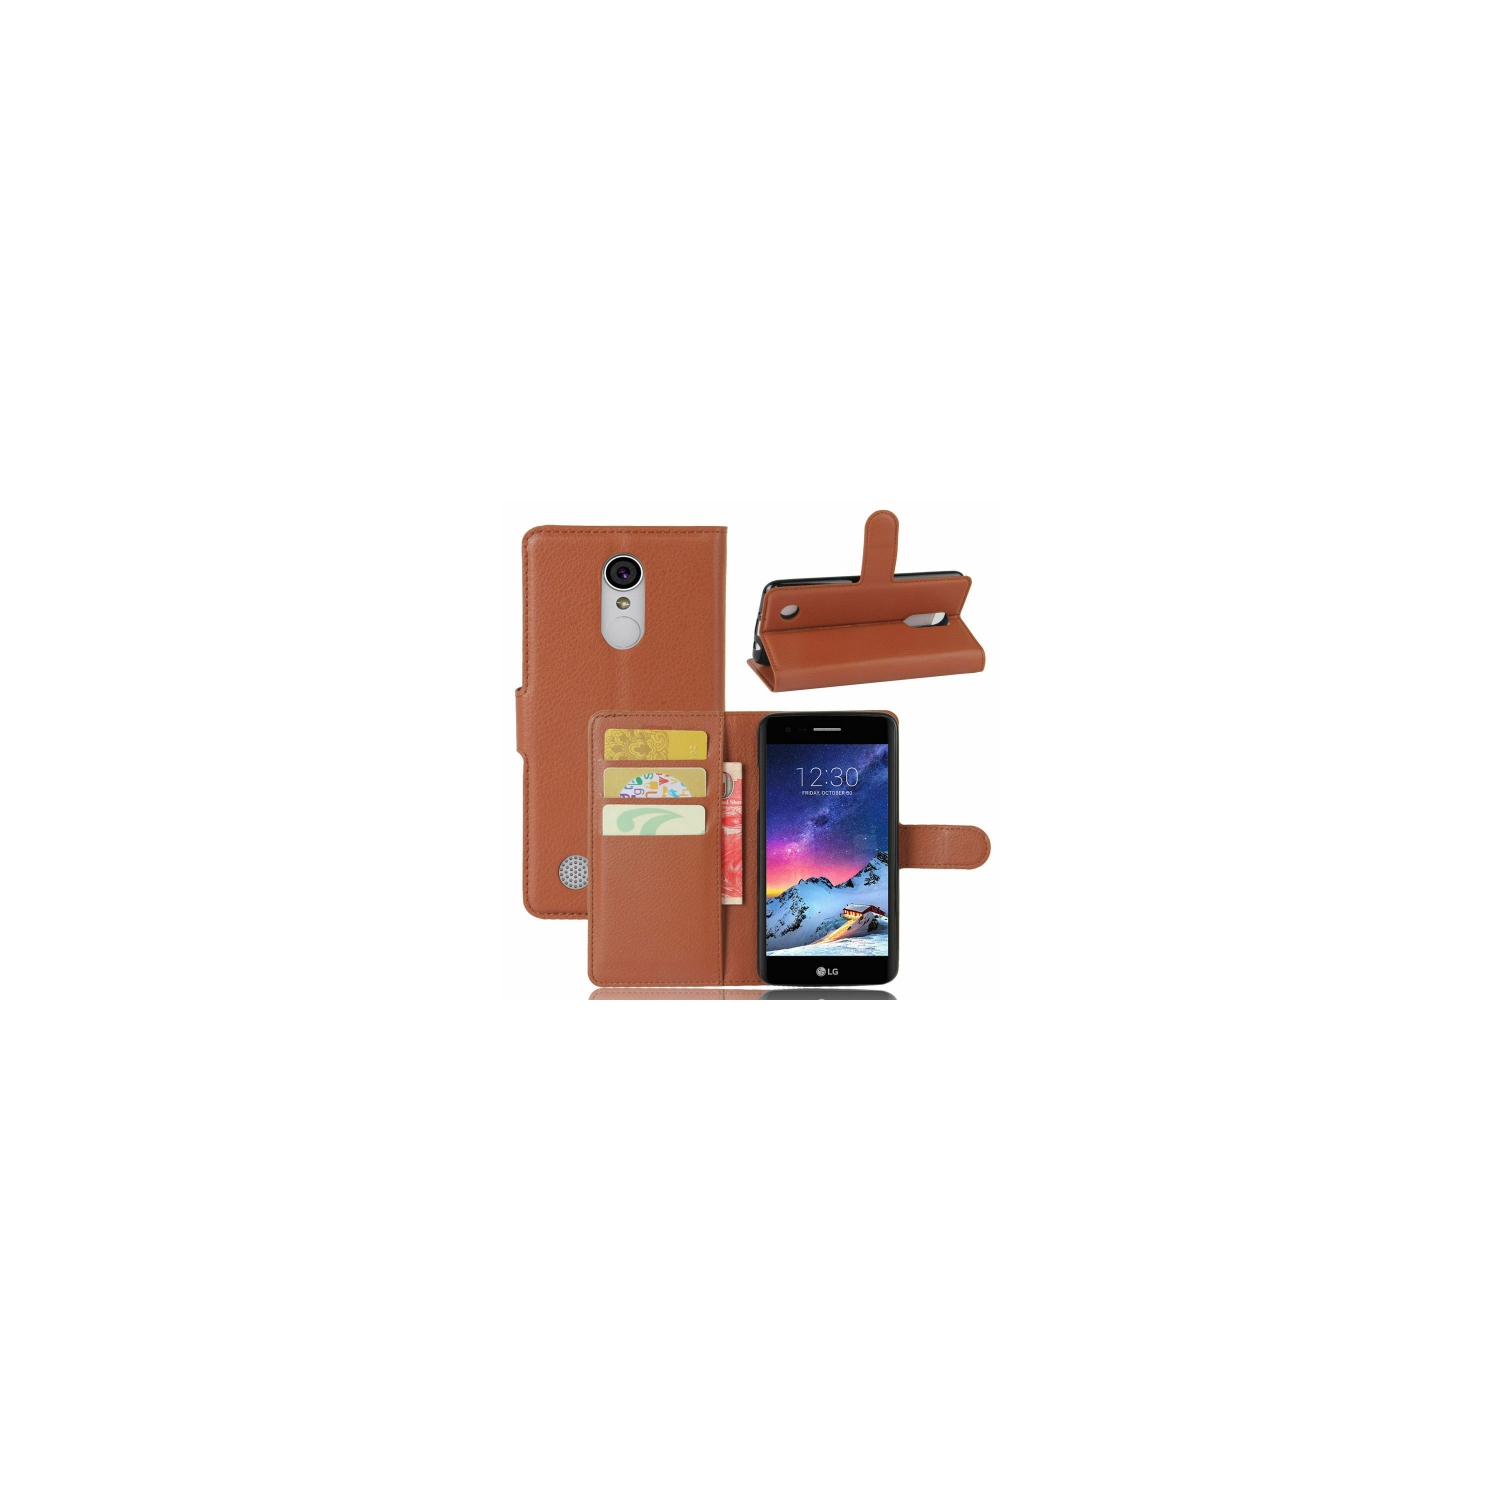 【CSmart】 Magnetic Card Slot Leather Folio Wallet Flip Case Cover for LG K4 2017, Brown